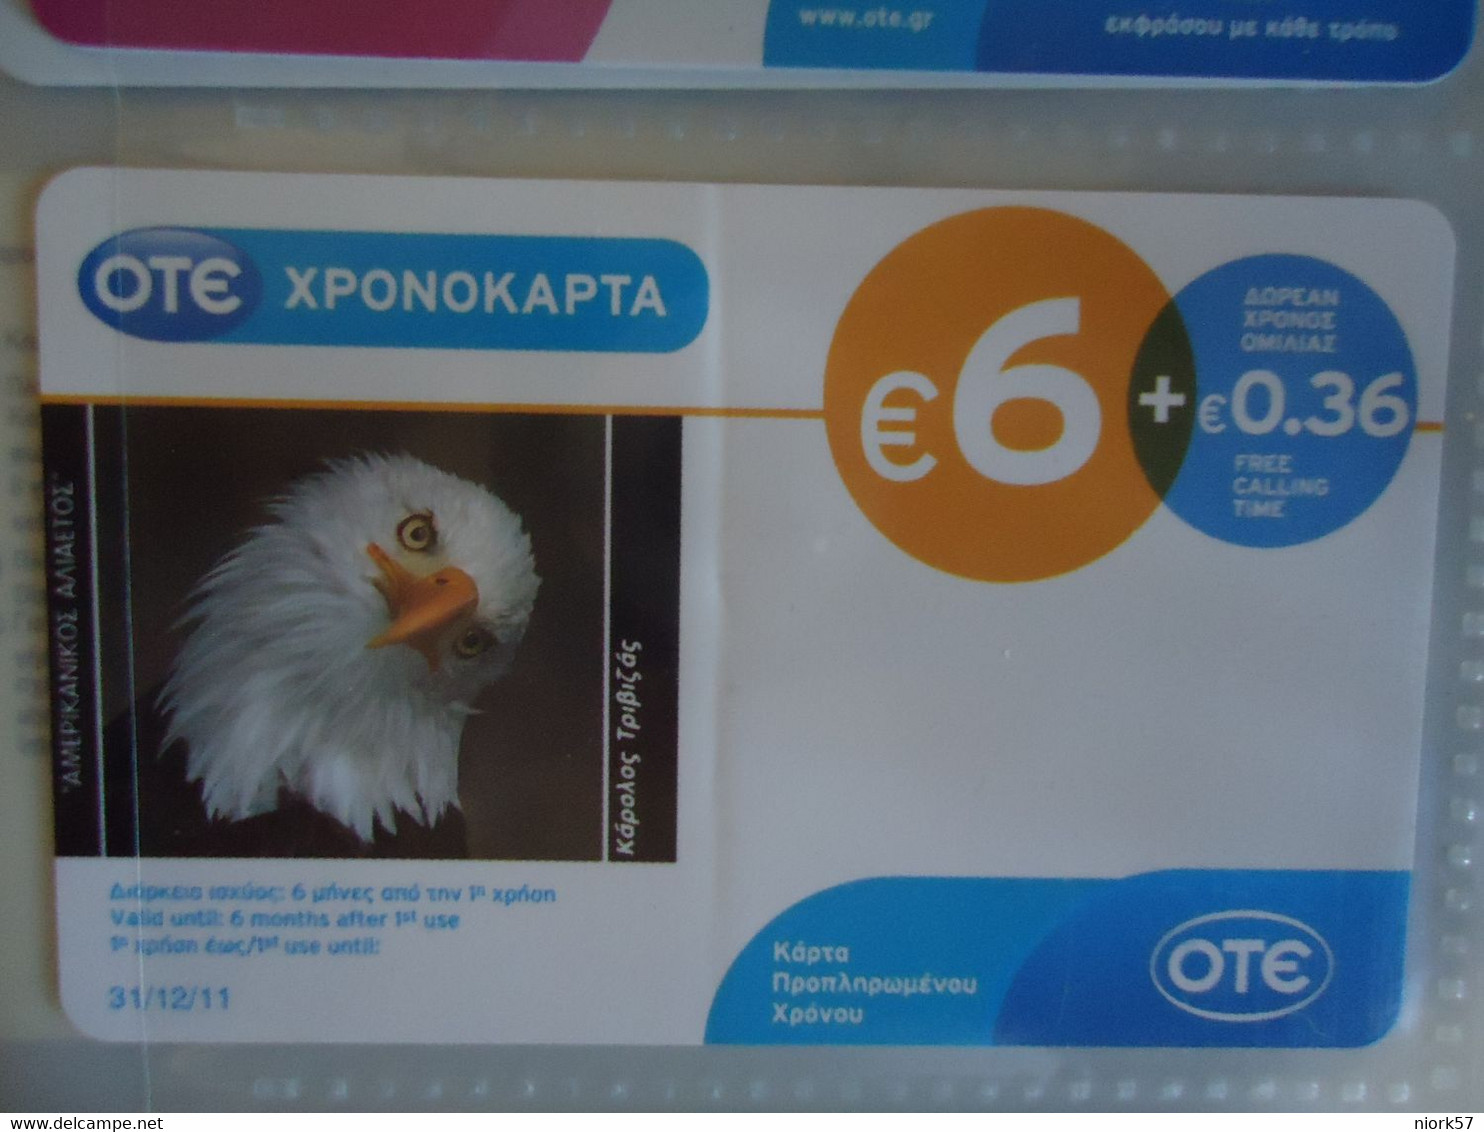 GREECE USED PREPAID CARDS BIRDS EAGLES - Aigles & Rapaces Diurnes